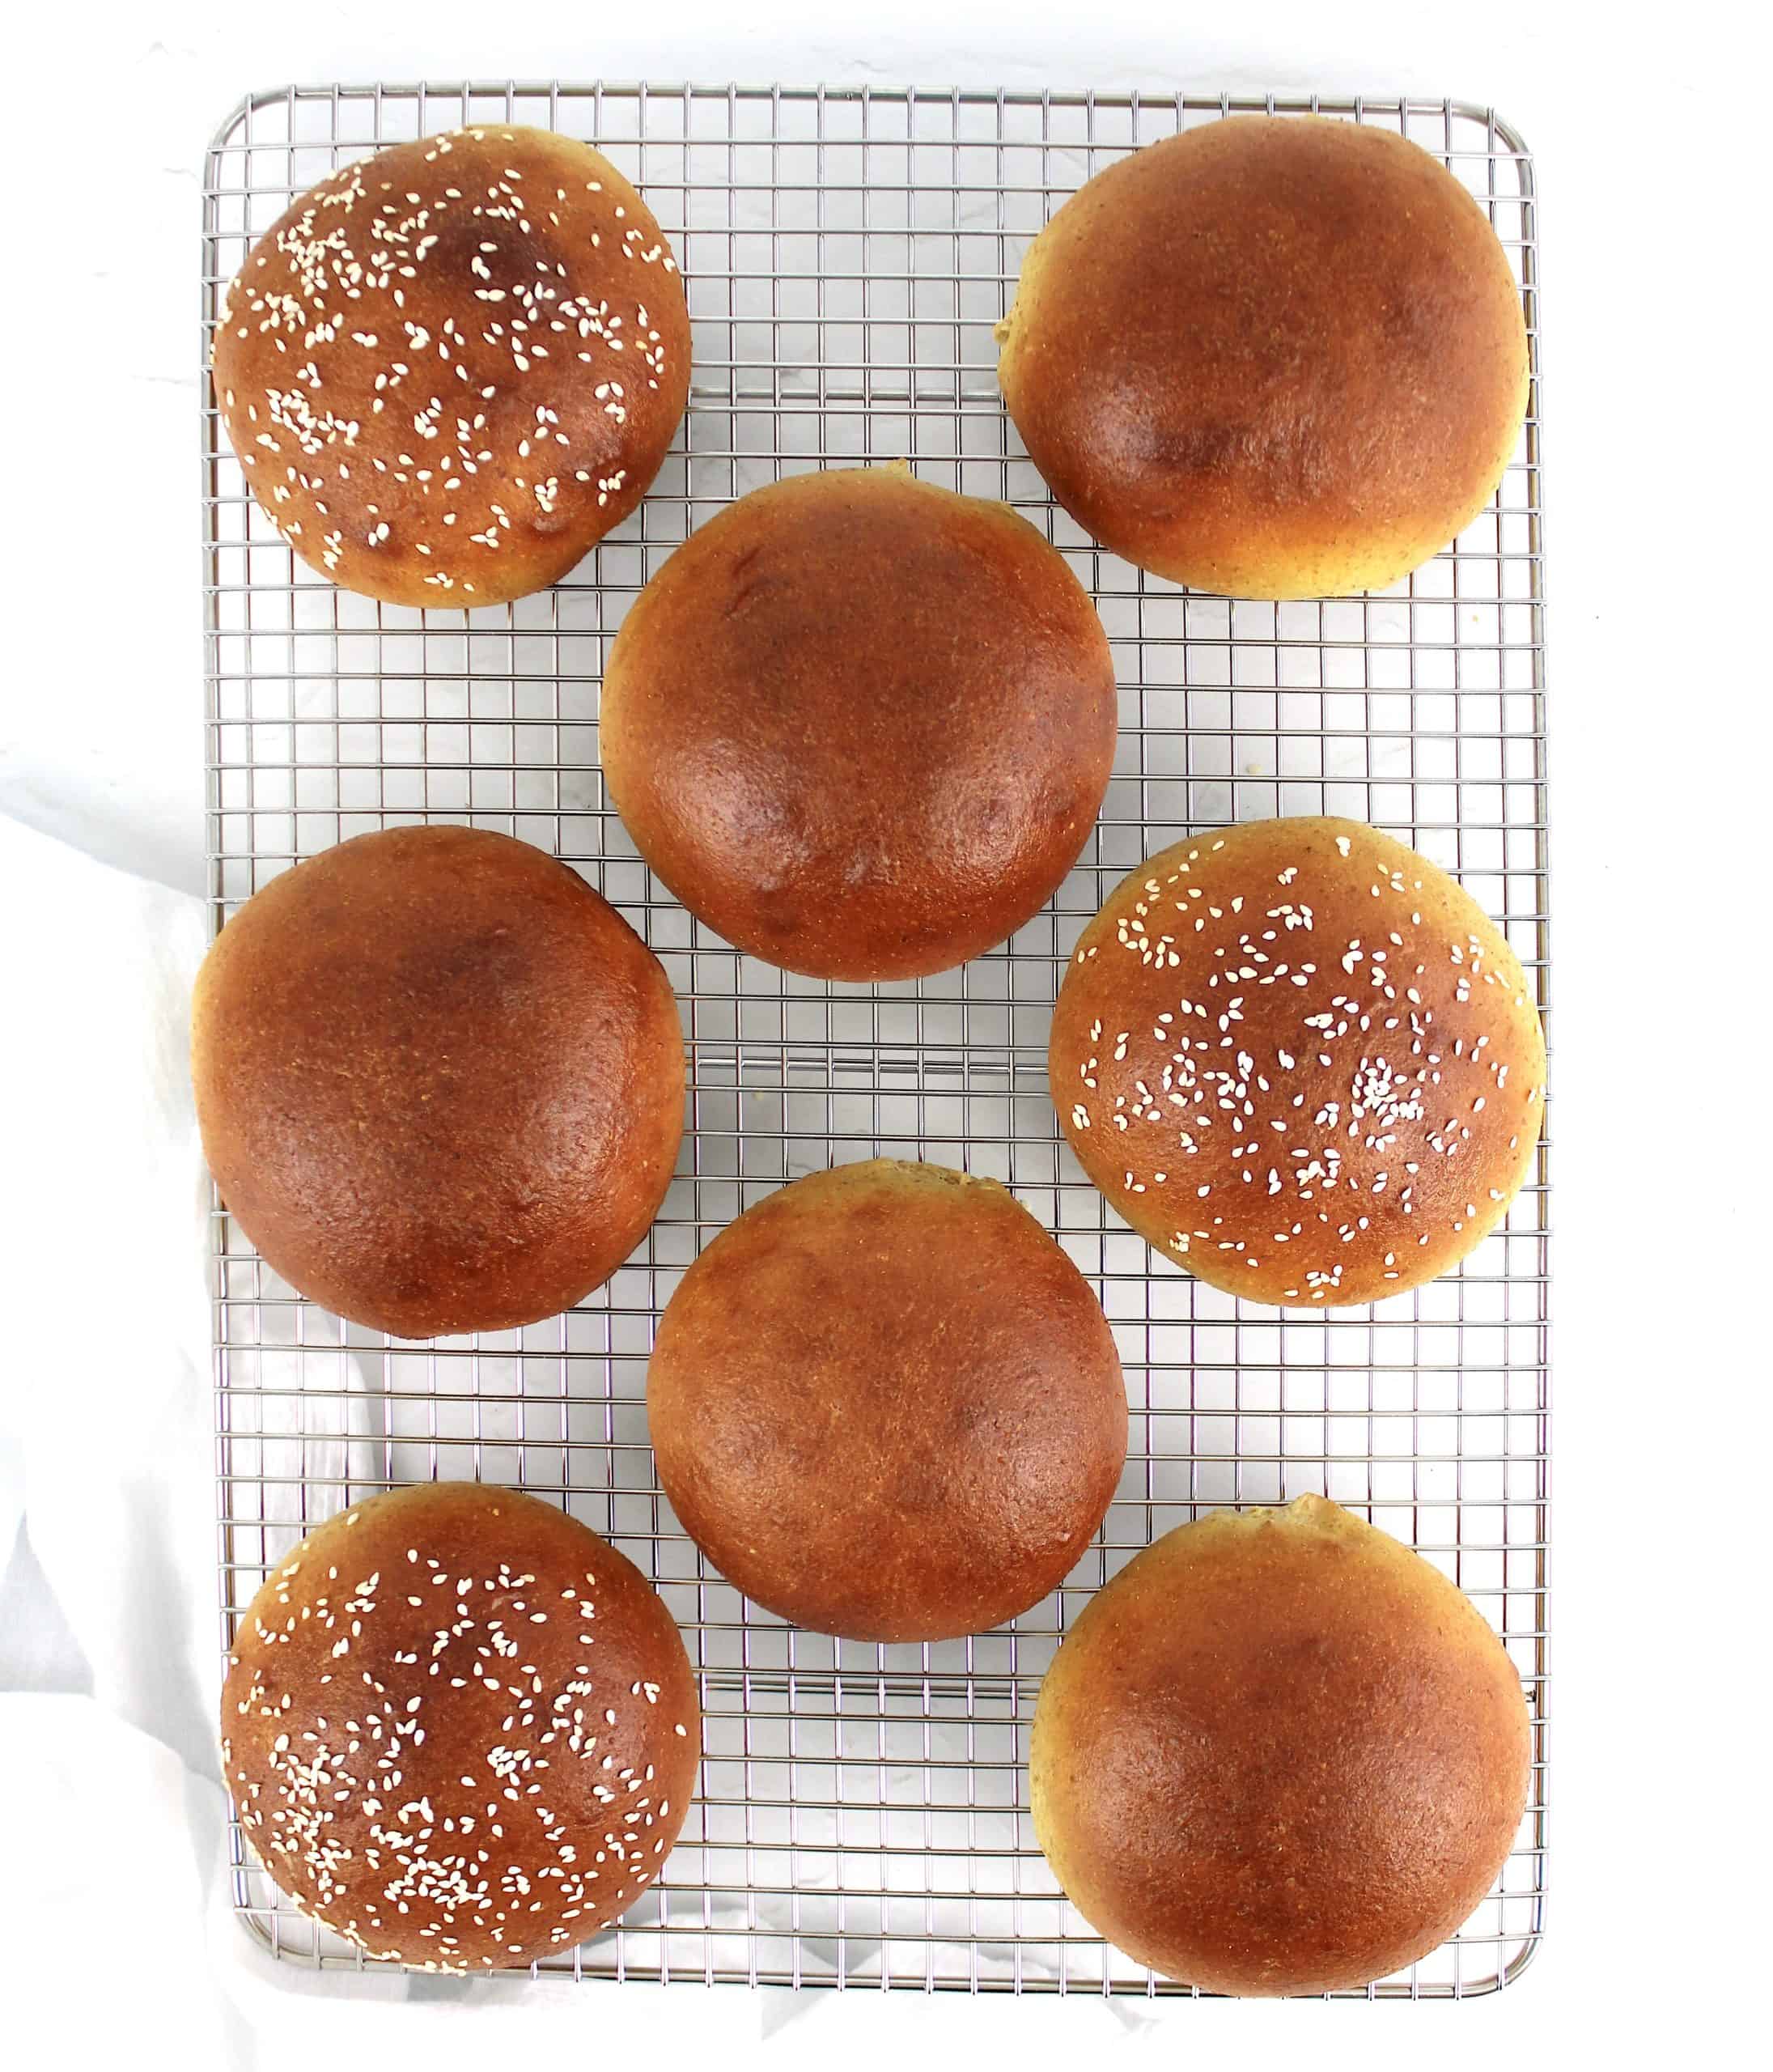 8 keto buns on cooling rack